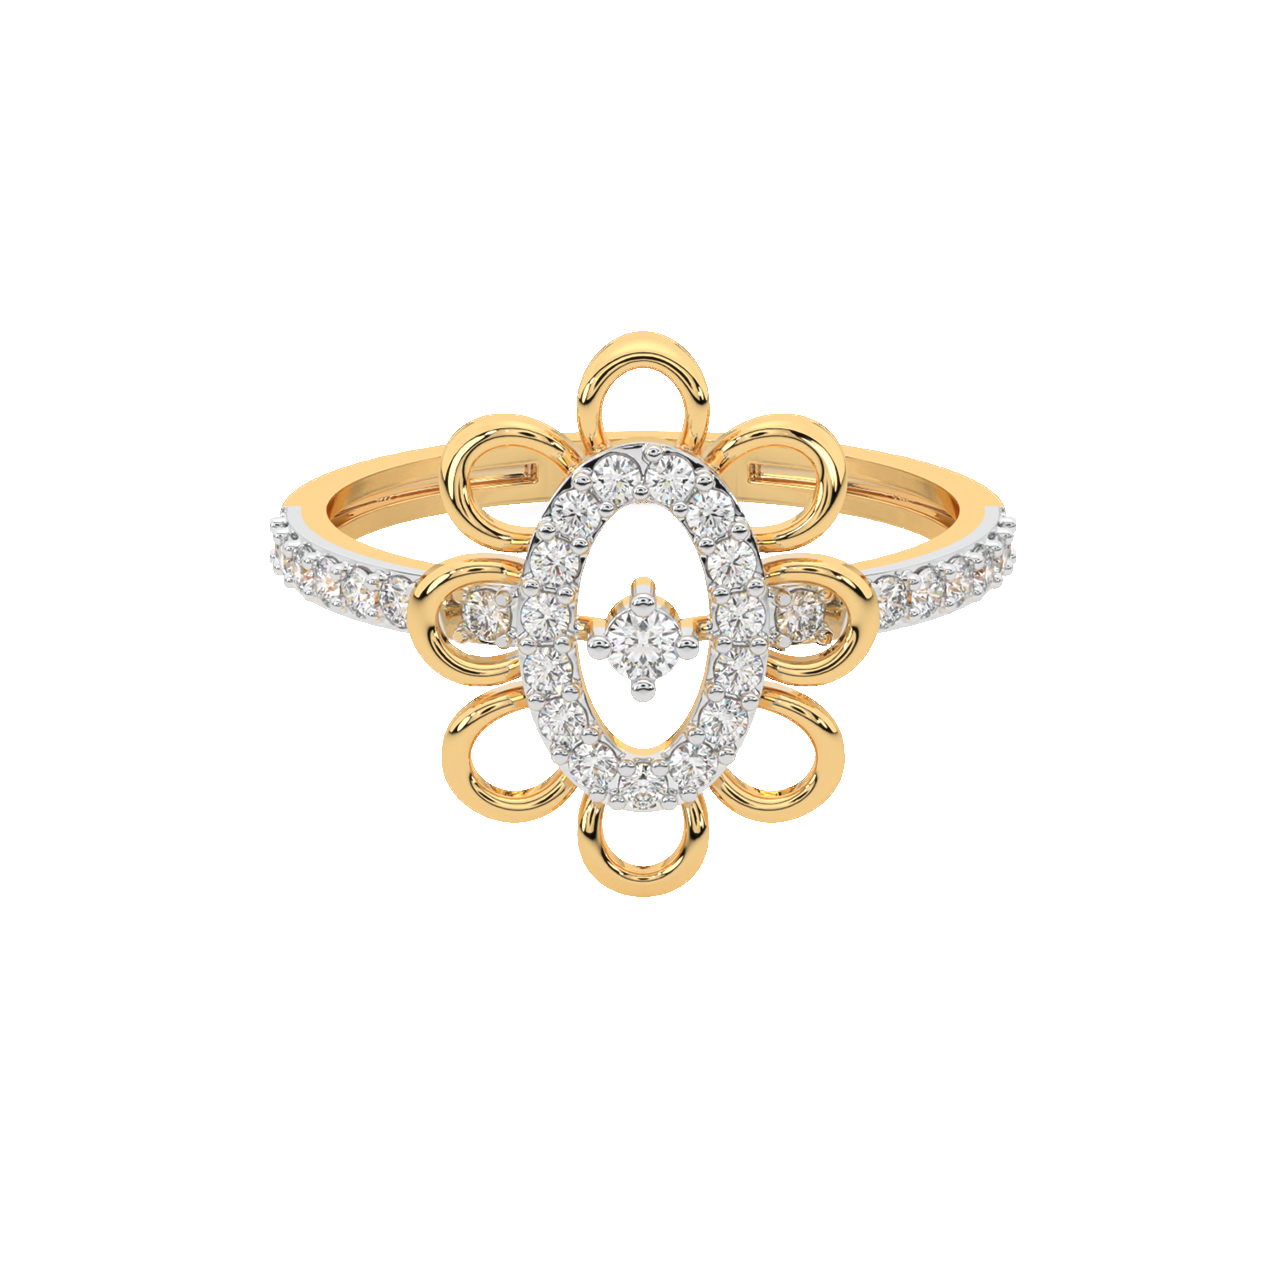 Jaxon Diamond Engagement Ring